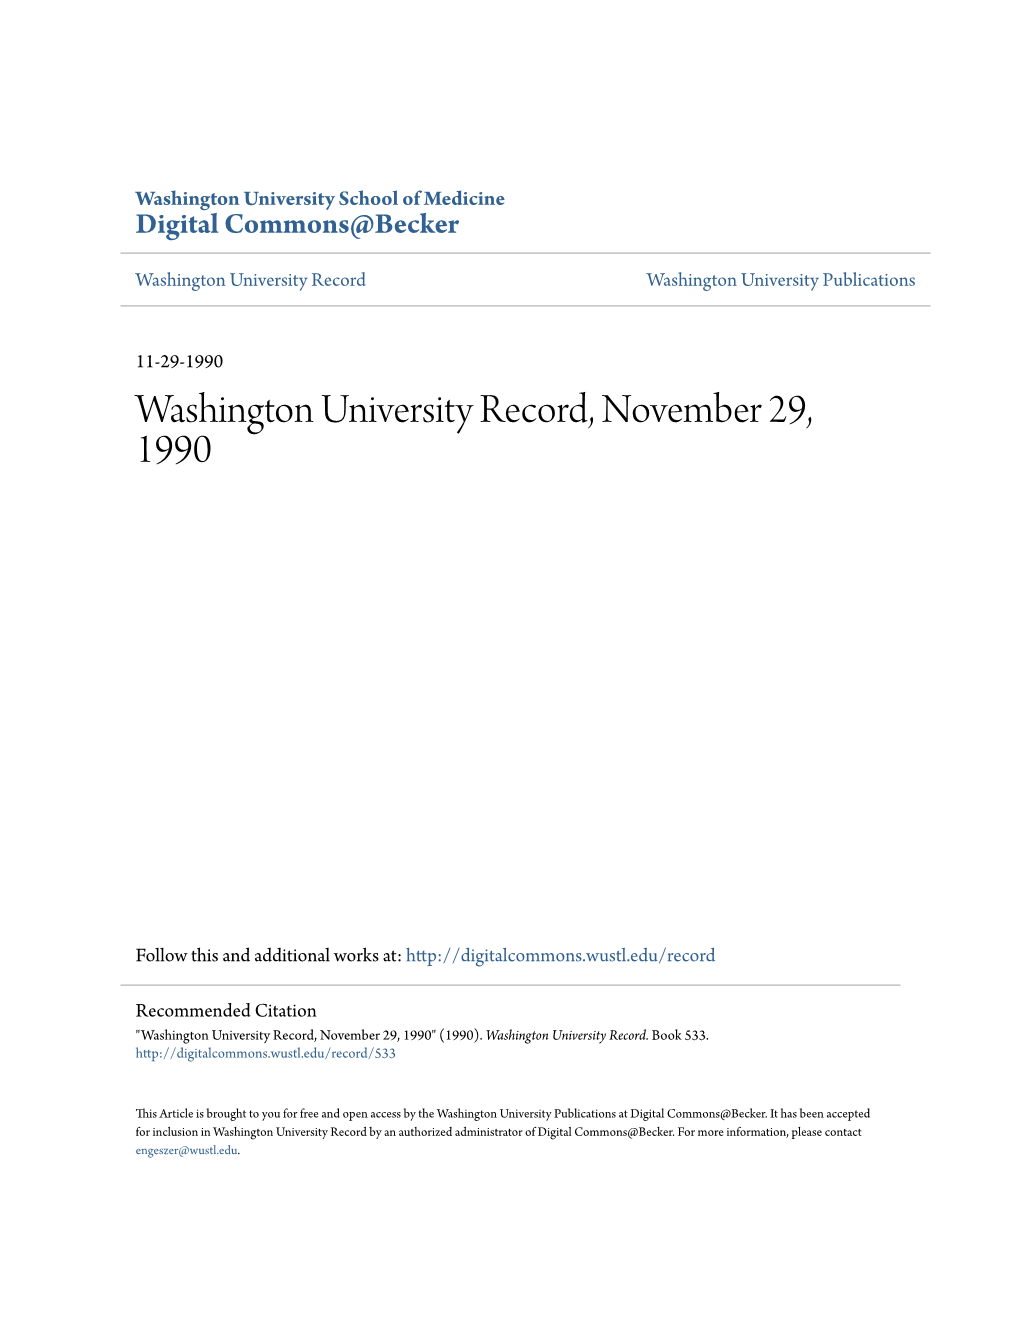 Washington University Record, November 29, 1990